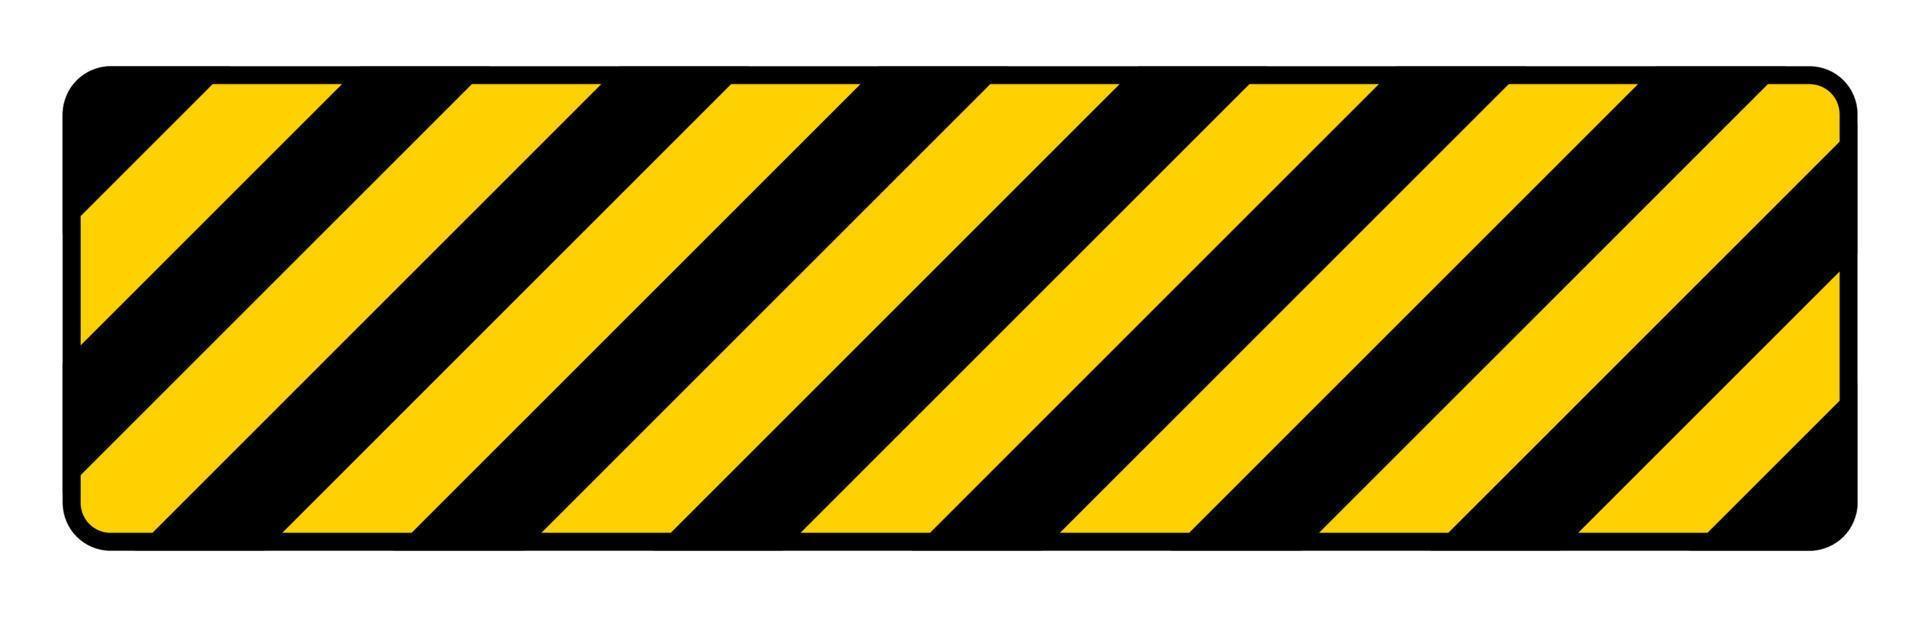 sinal de piso amarelo listrado preto sobre fundo branco vetor